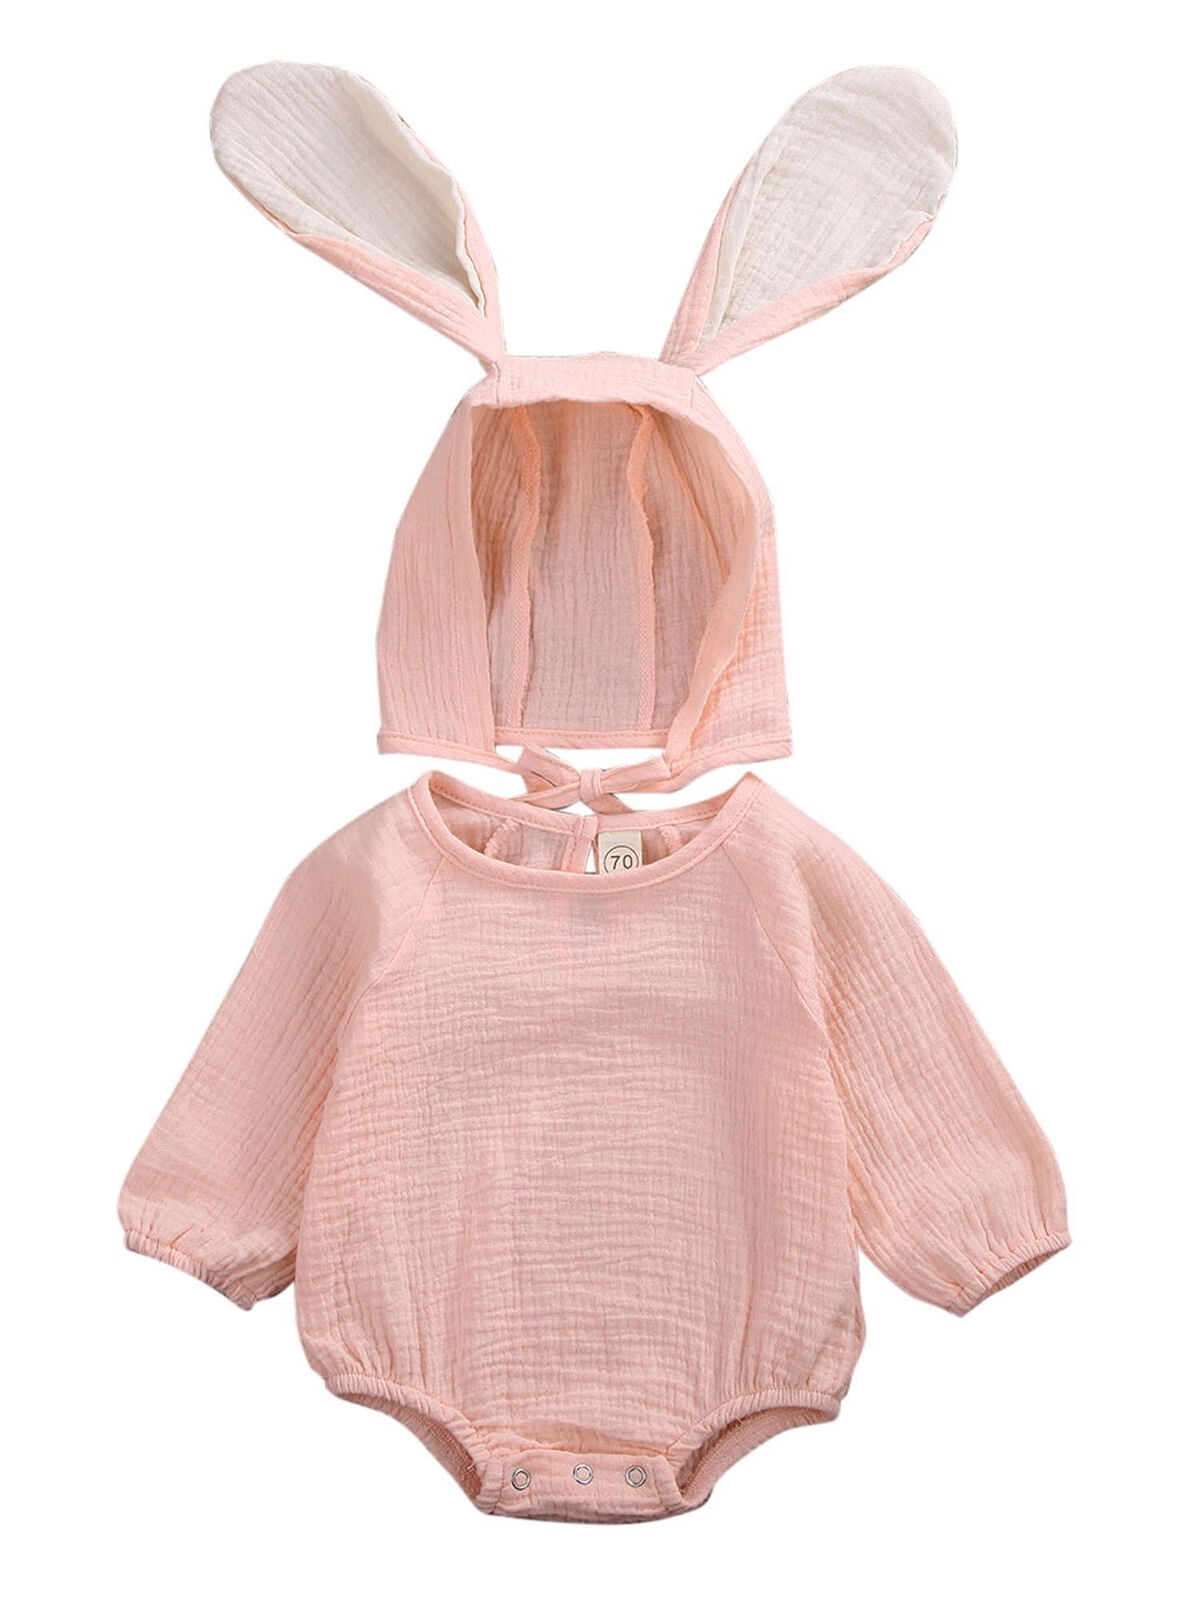 Baby Girl My First Easter Romper Newborn Girl Strip Bodysuits Rabbit Onesies Long Sleeves Jumpsuits Hat